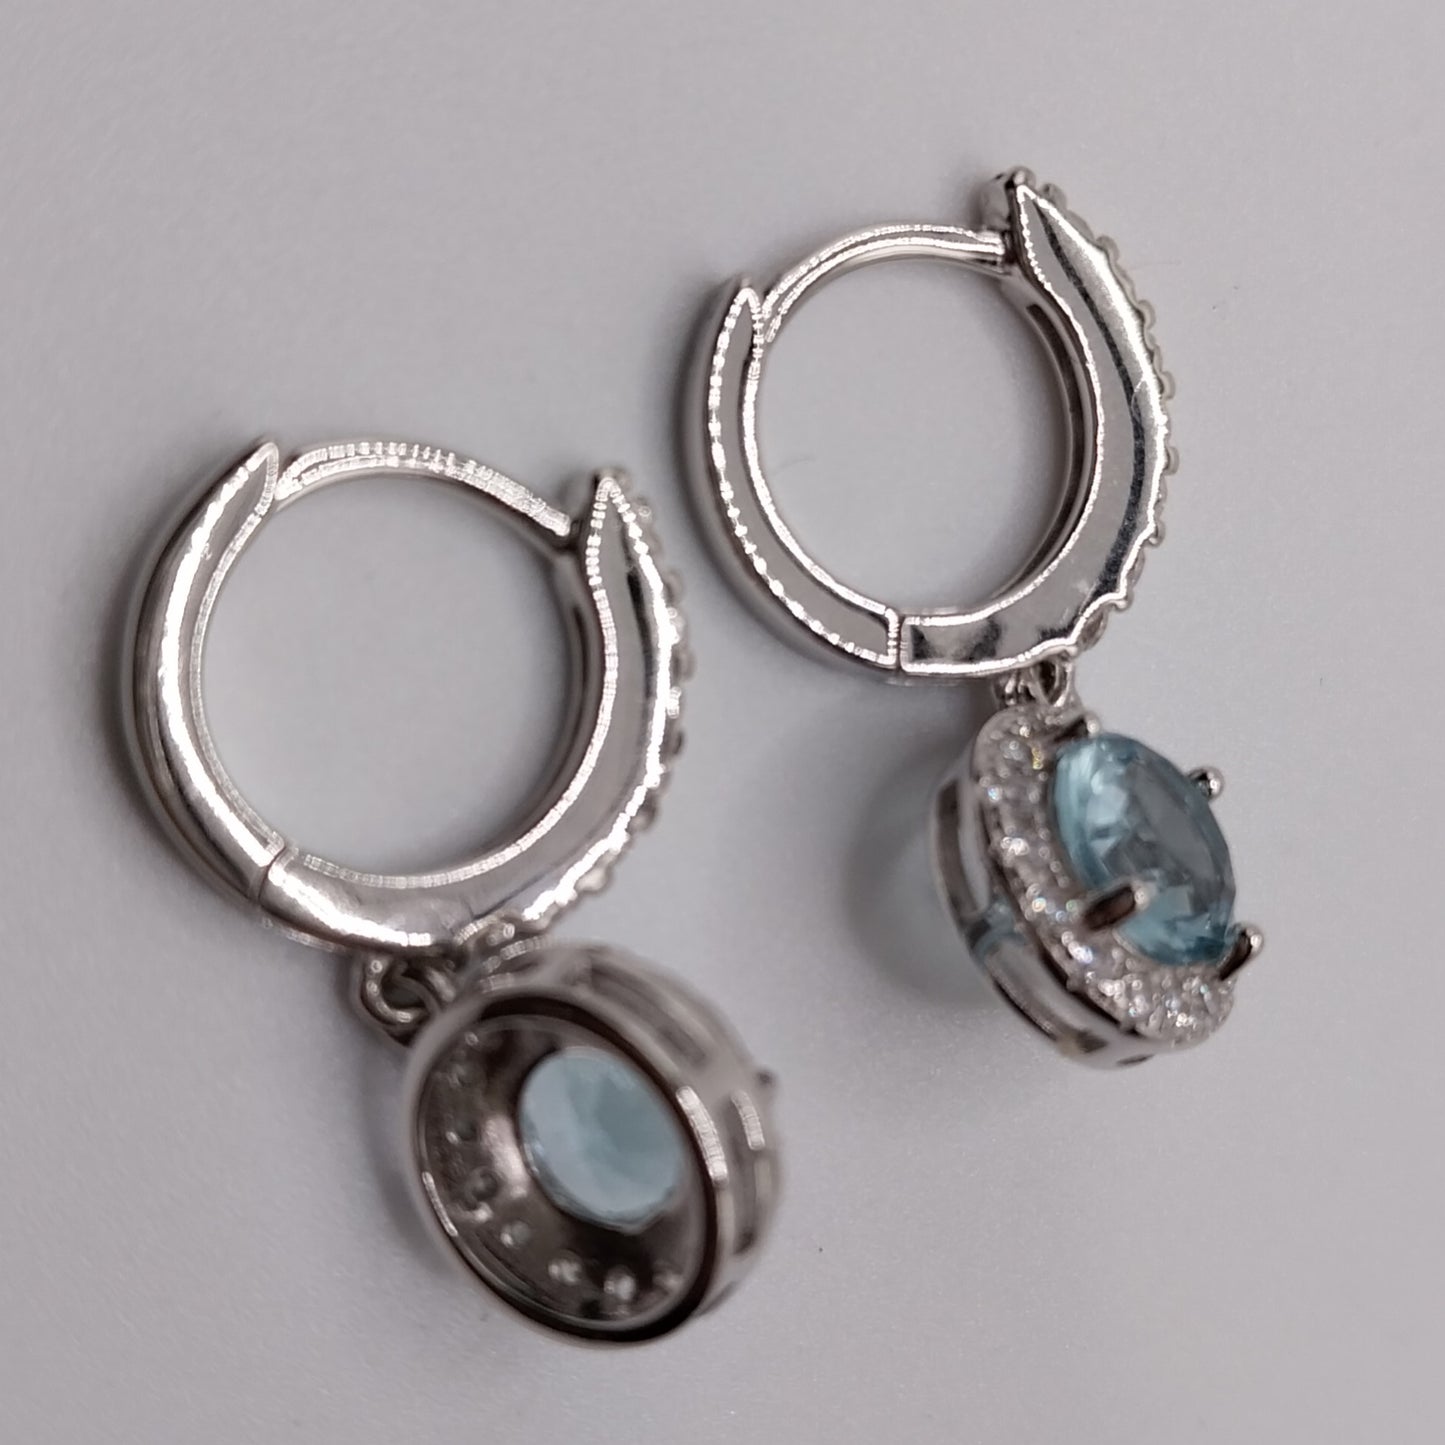 Silver 925 Dangling Earrings with Aquamarine CZ